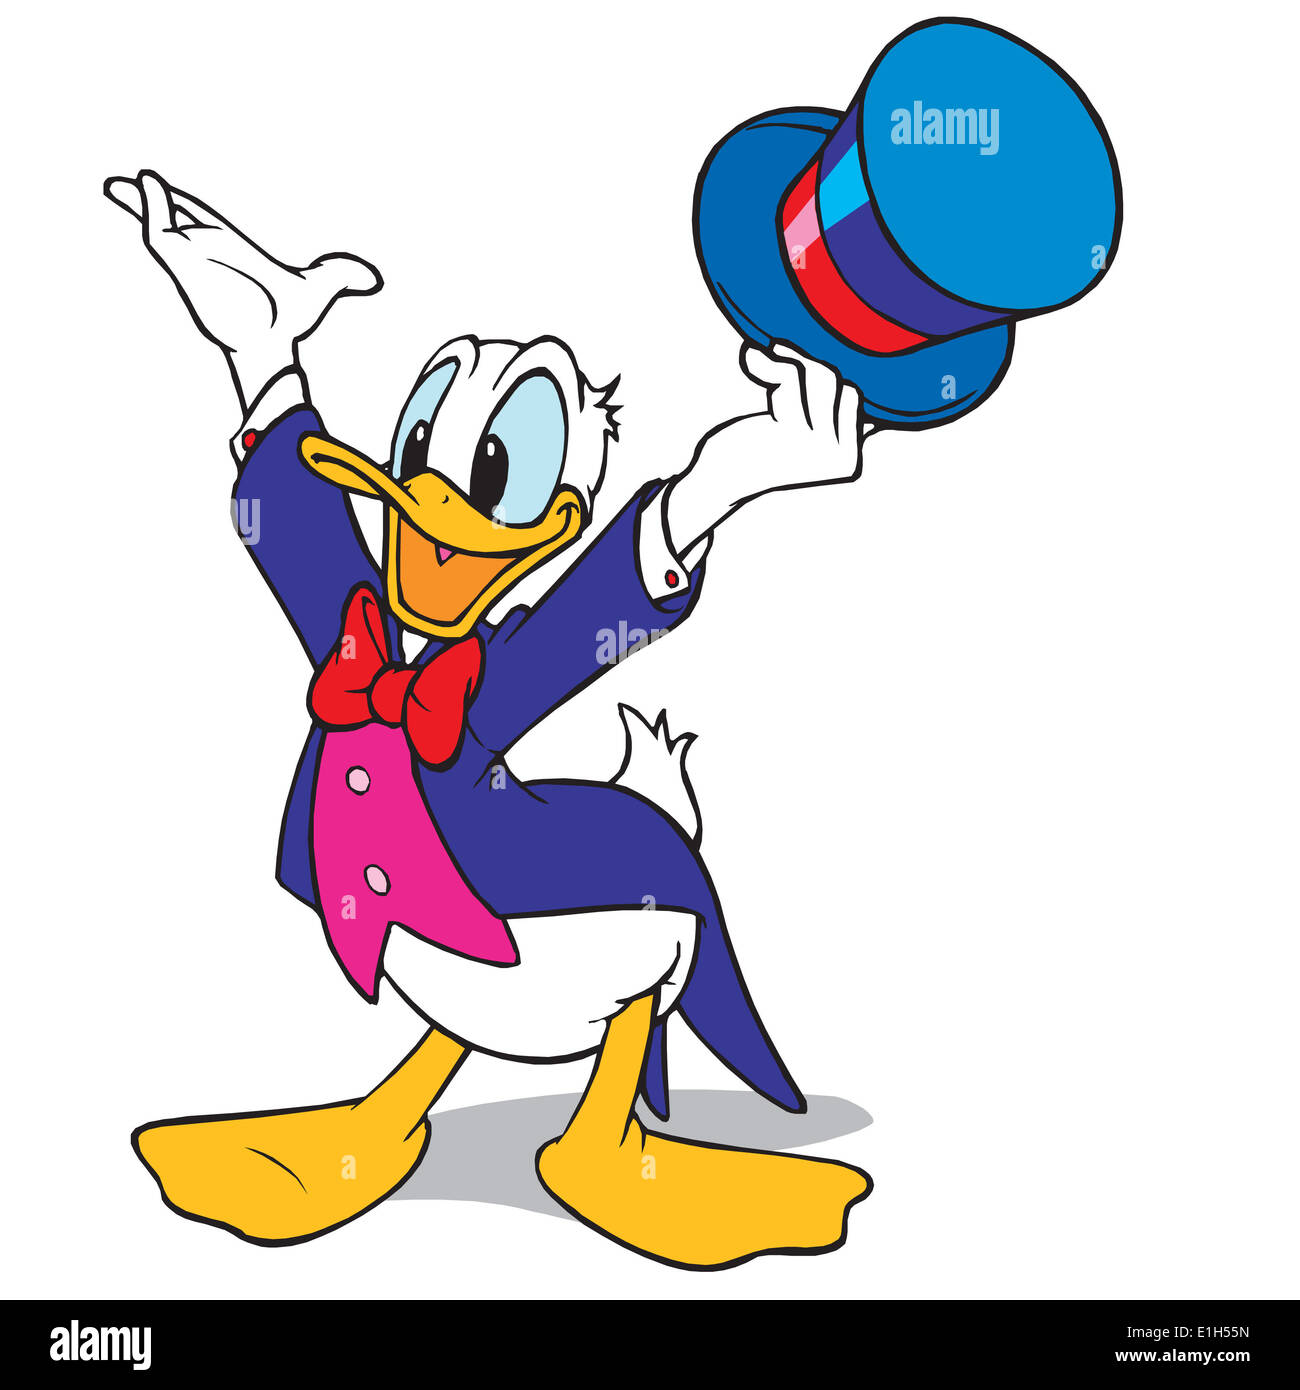 Donald duck cartoon hi-res stock photography and images - Alamy